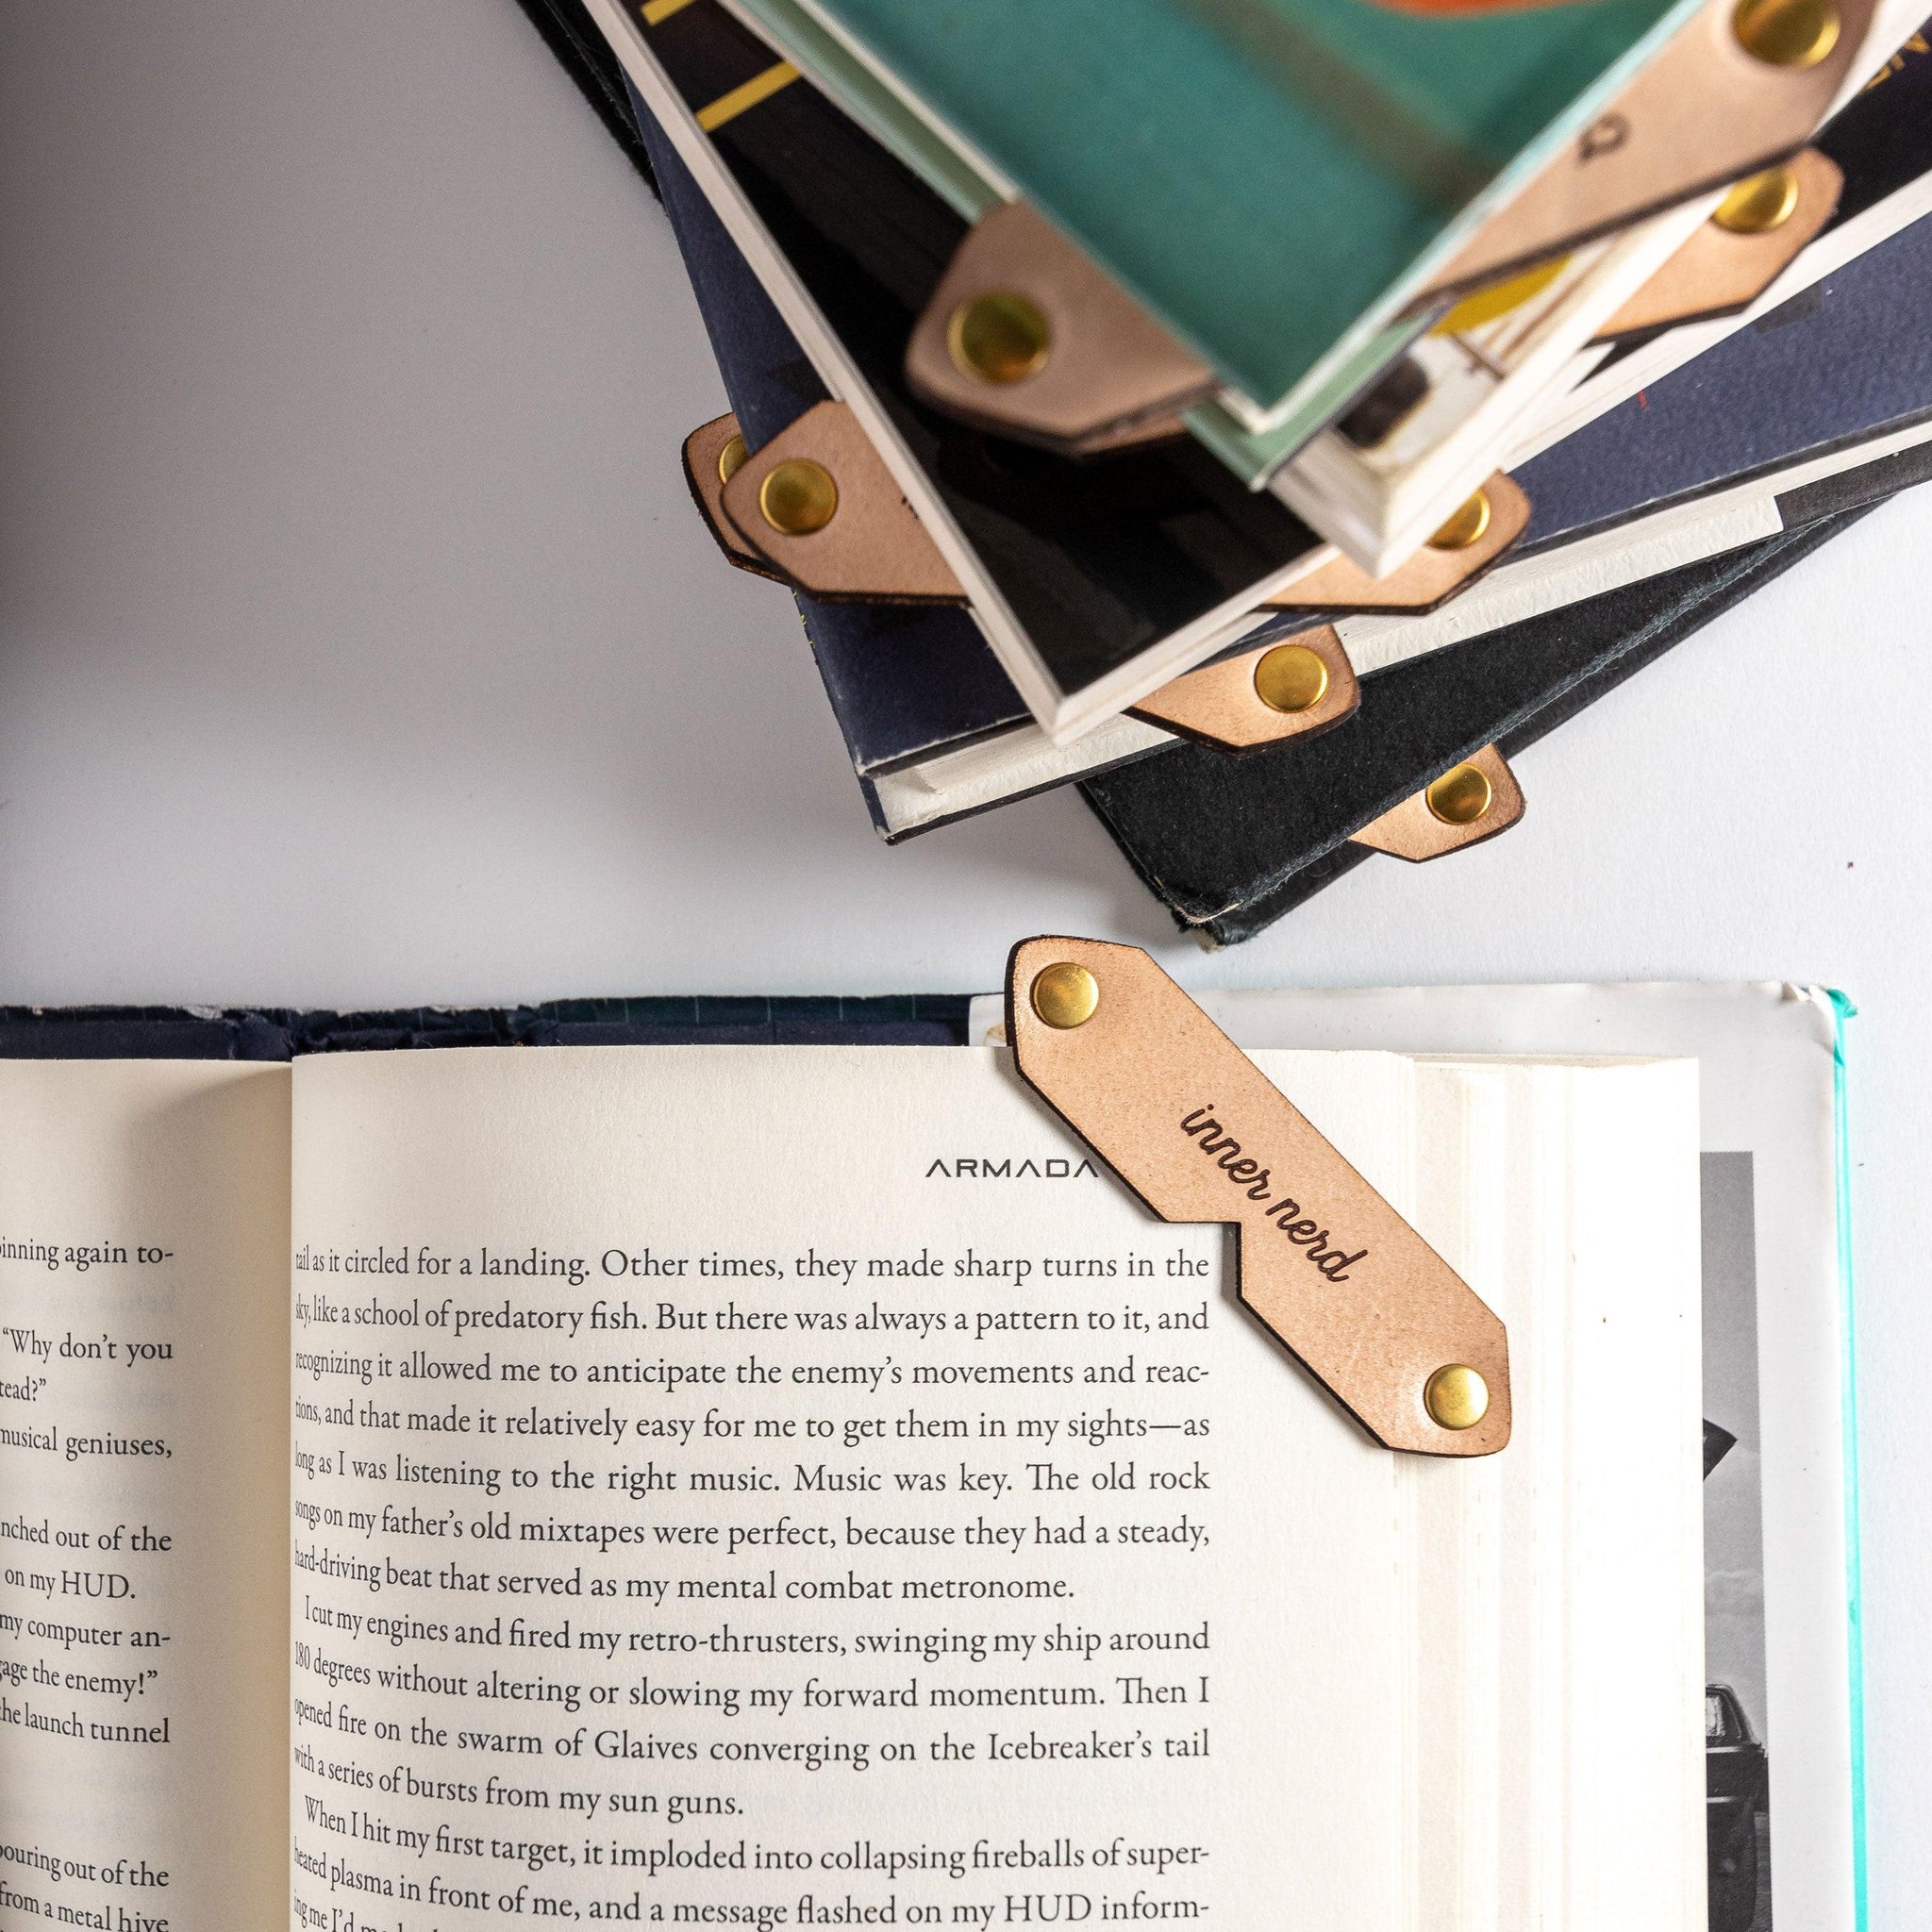 Just one more chapter Corner Leather Bookmark - Espacio Handmade